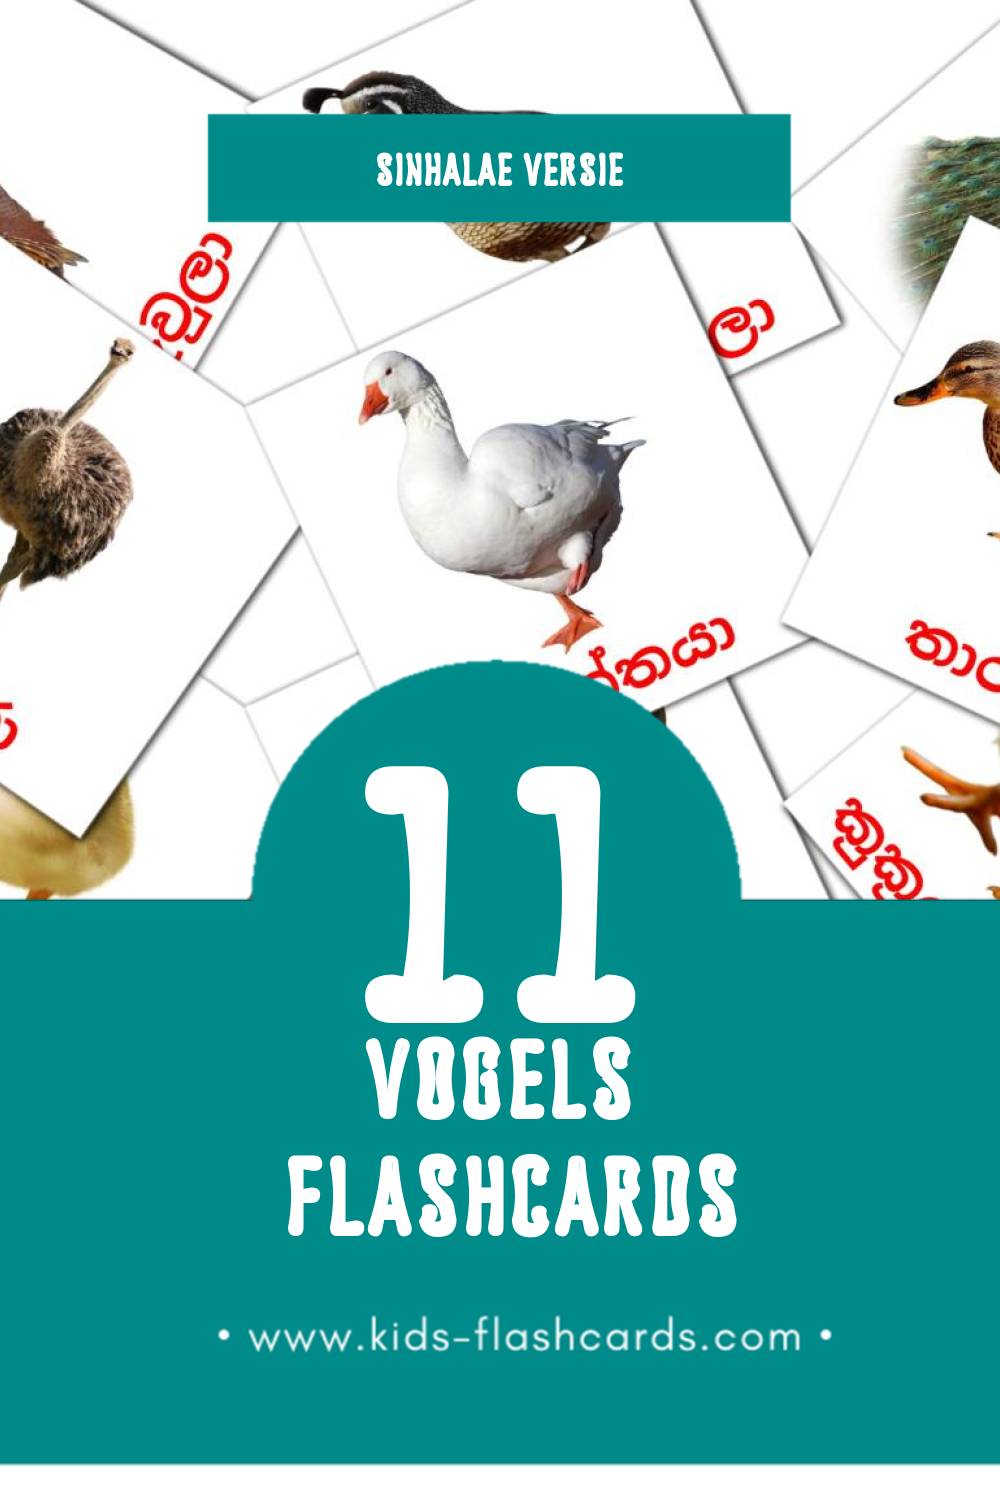 Visuele කුරුල්ලන් Flashcards voor Kleuters (11 kaarten in het Sinhala)